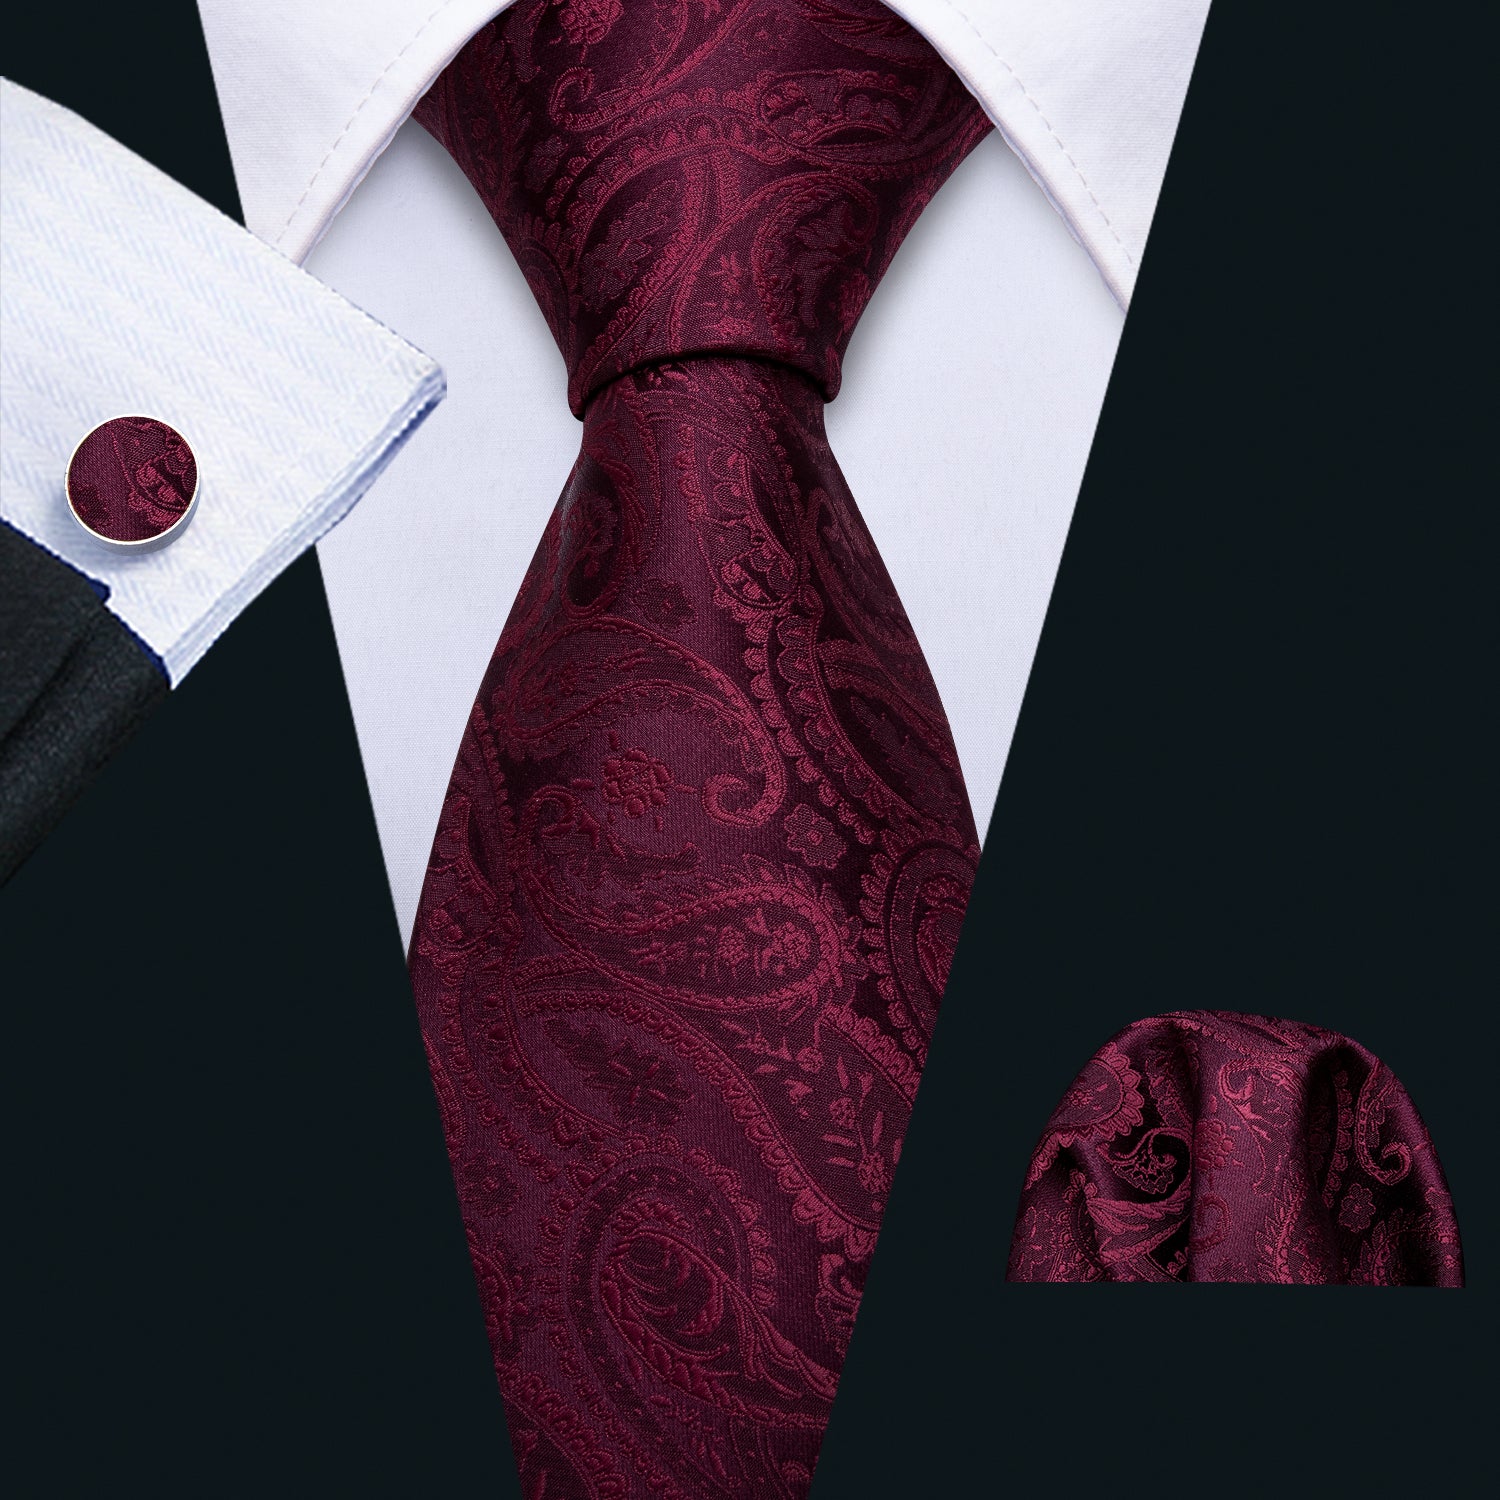 Fashion Wine Paisley  Tie Pocket Square Cufflinks Set